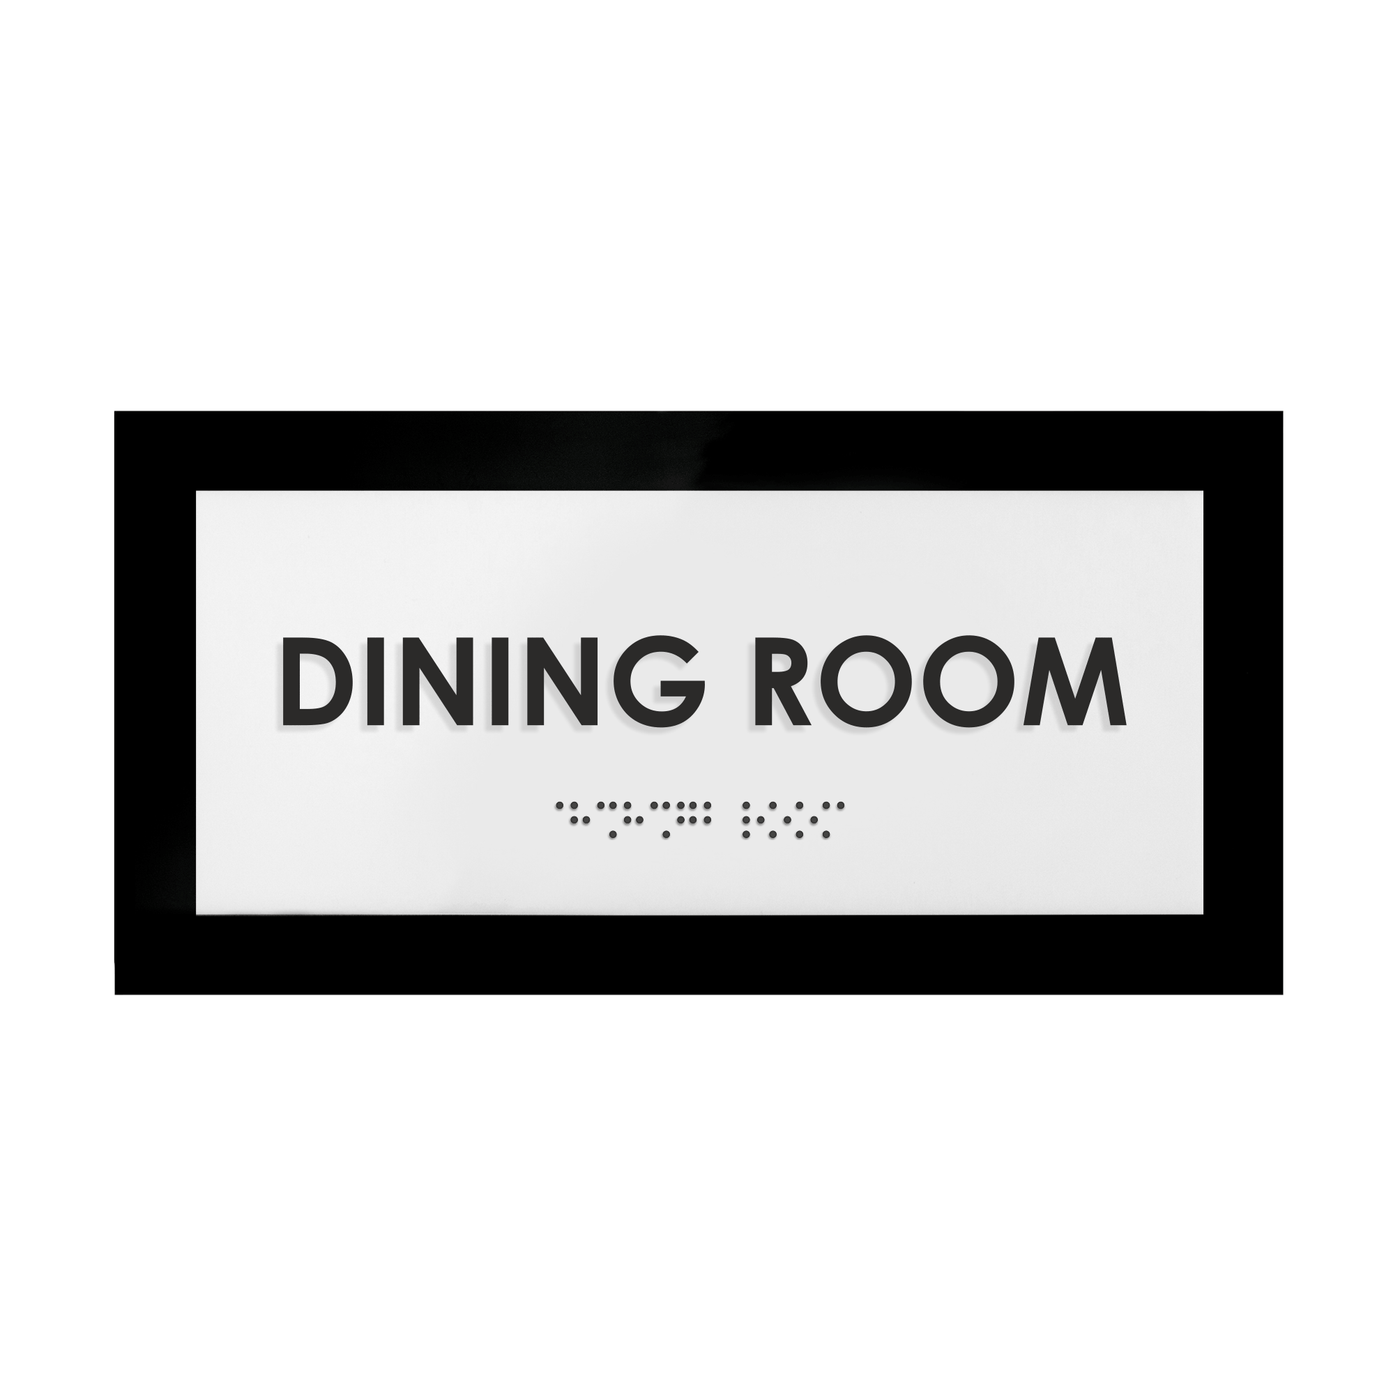 Acrylic Dining Room Door Sign - "Simple" Design